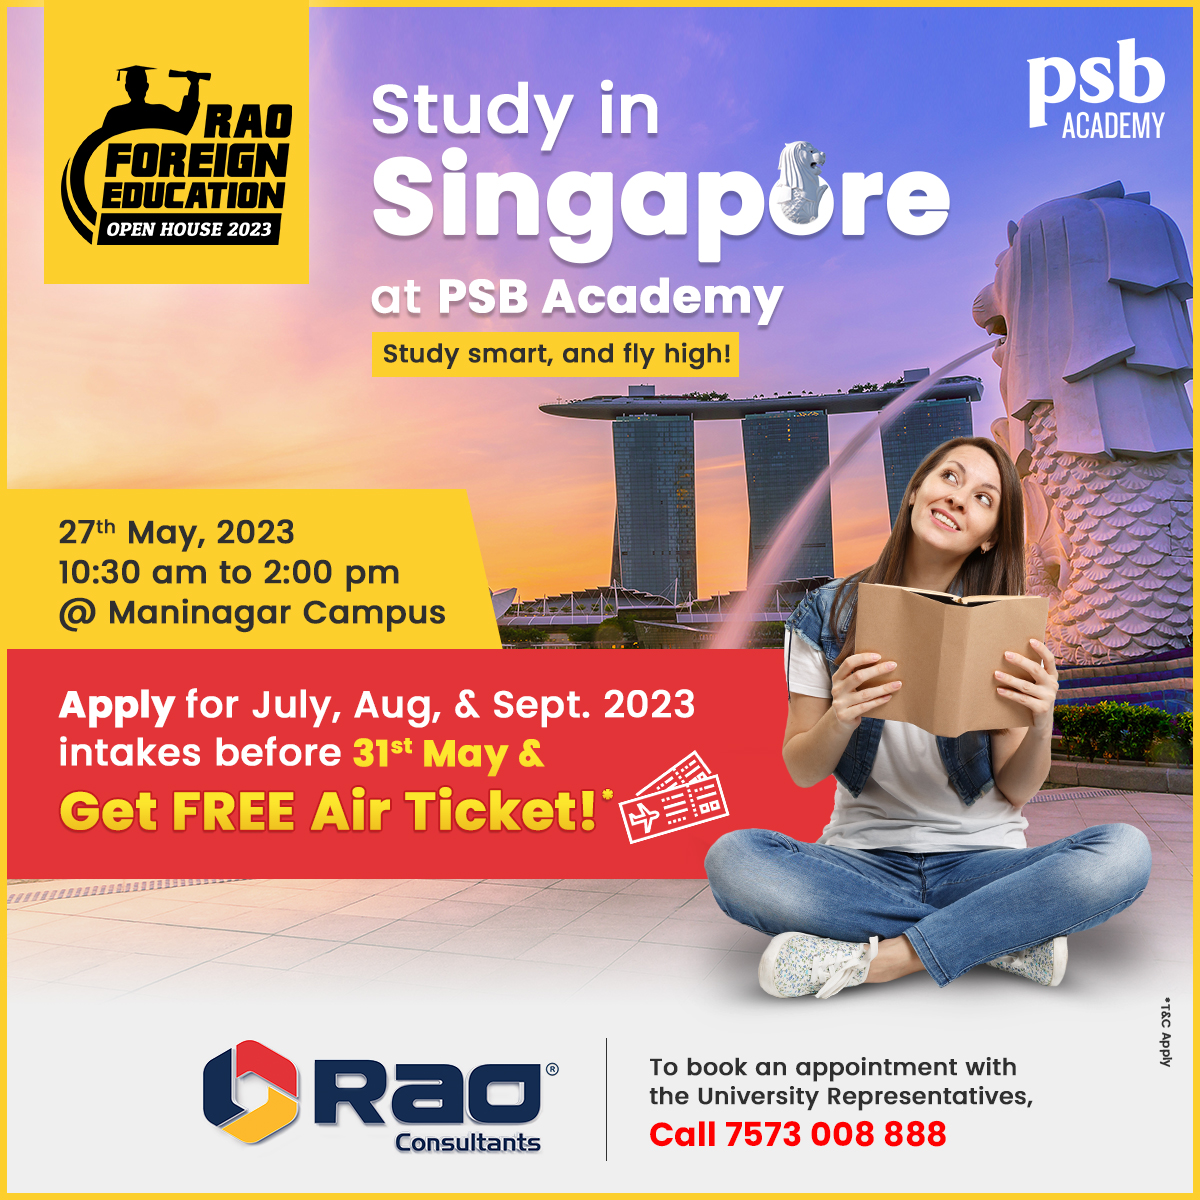 🌟 Invitation to Study in Singapore with a Free Air Ticket! 🇸🇬✈️

To register: bit.ly/Rao-FE23

Call or Whatsapp 075730 08888

#RaoConsultants #RaoFEOpenHouse #Ahmedabad #StudyAbroad #UniversityOpenHouse #maninagar #Singaporeuniversity #Studyinsingapore